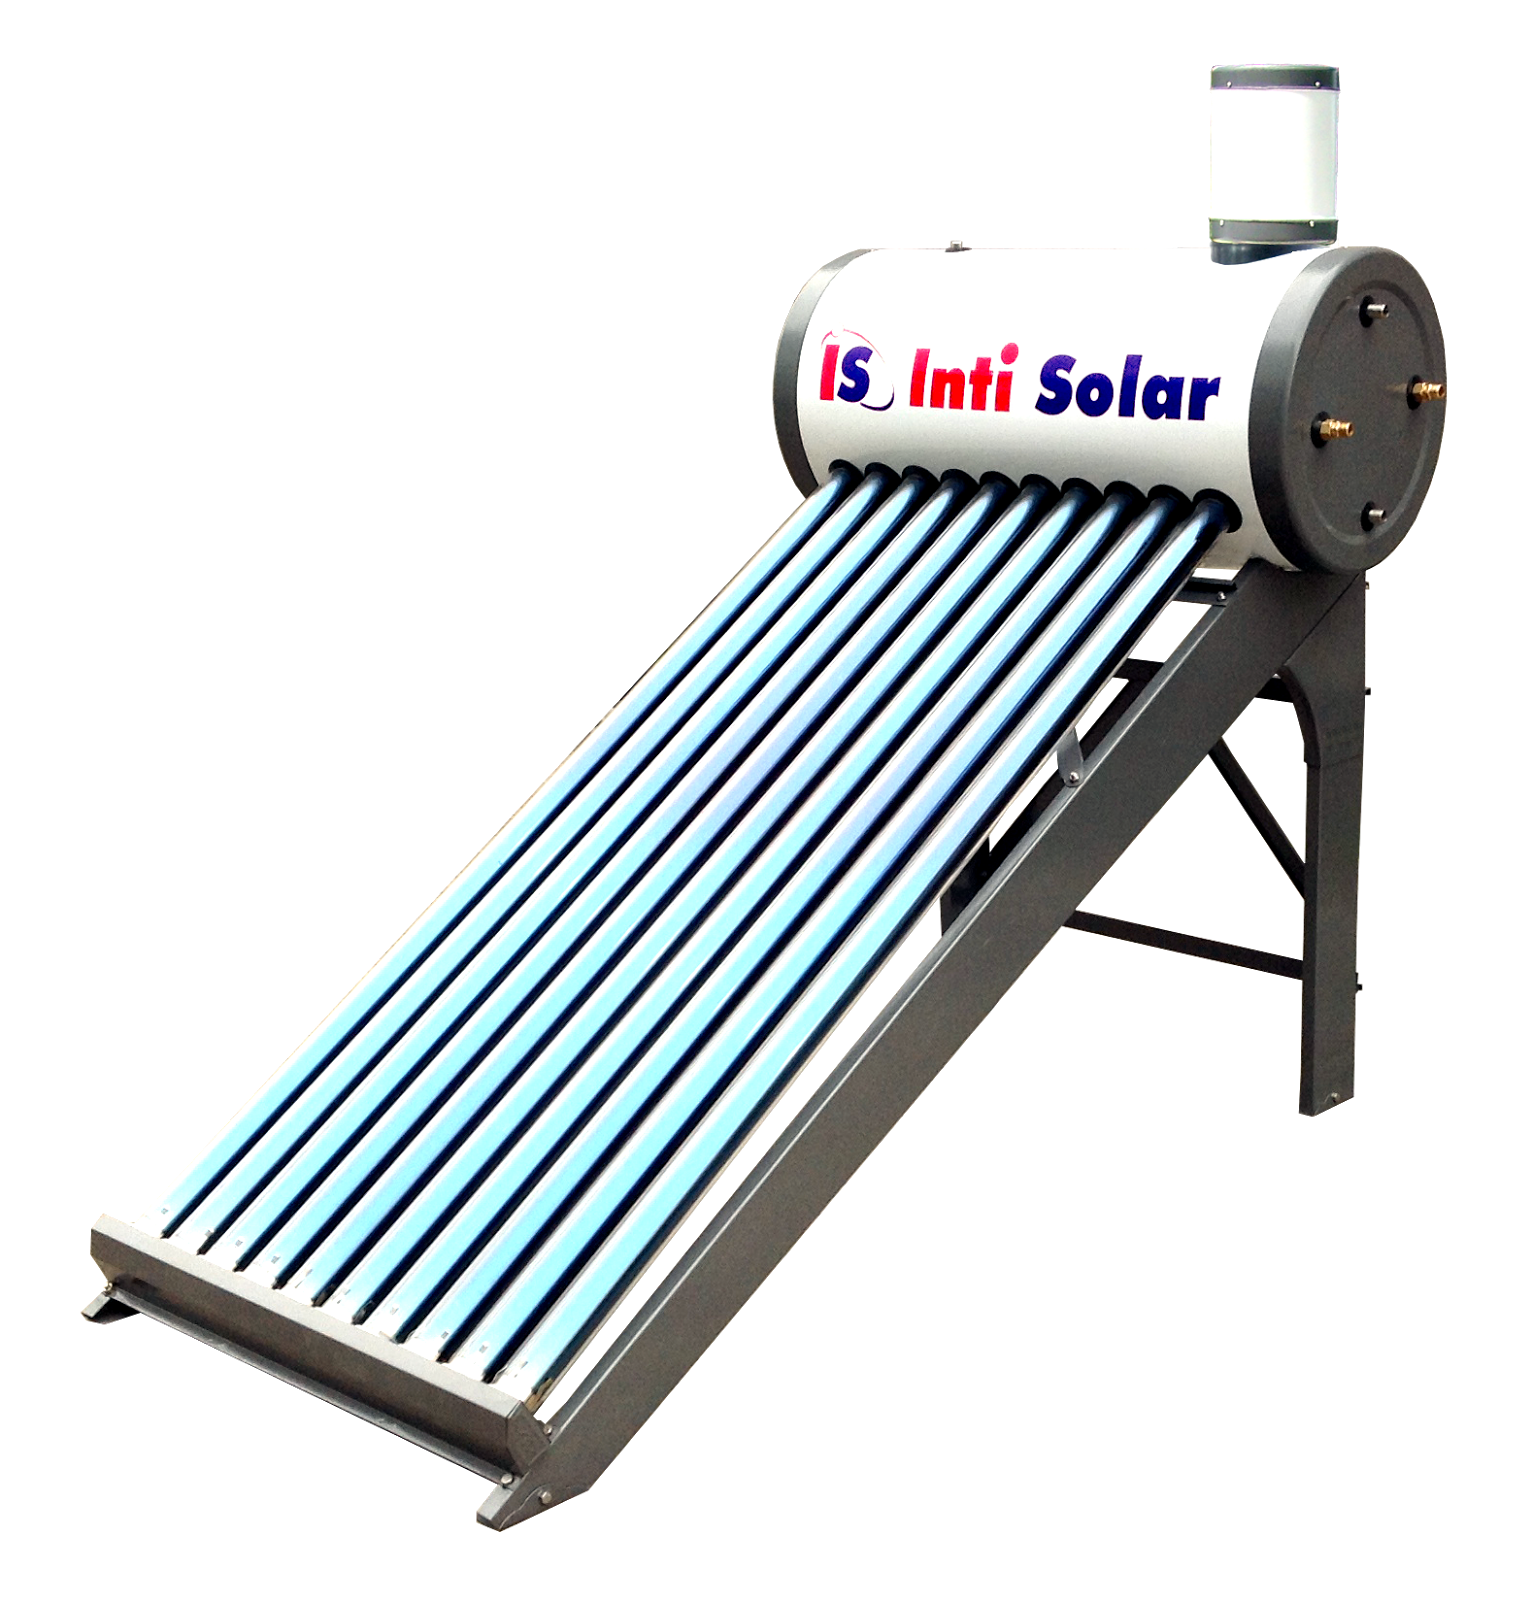 service inti solar balaraja